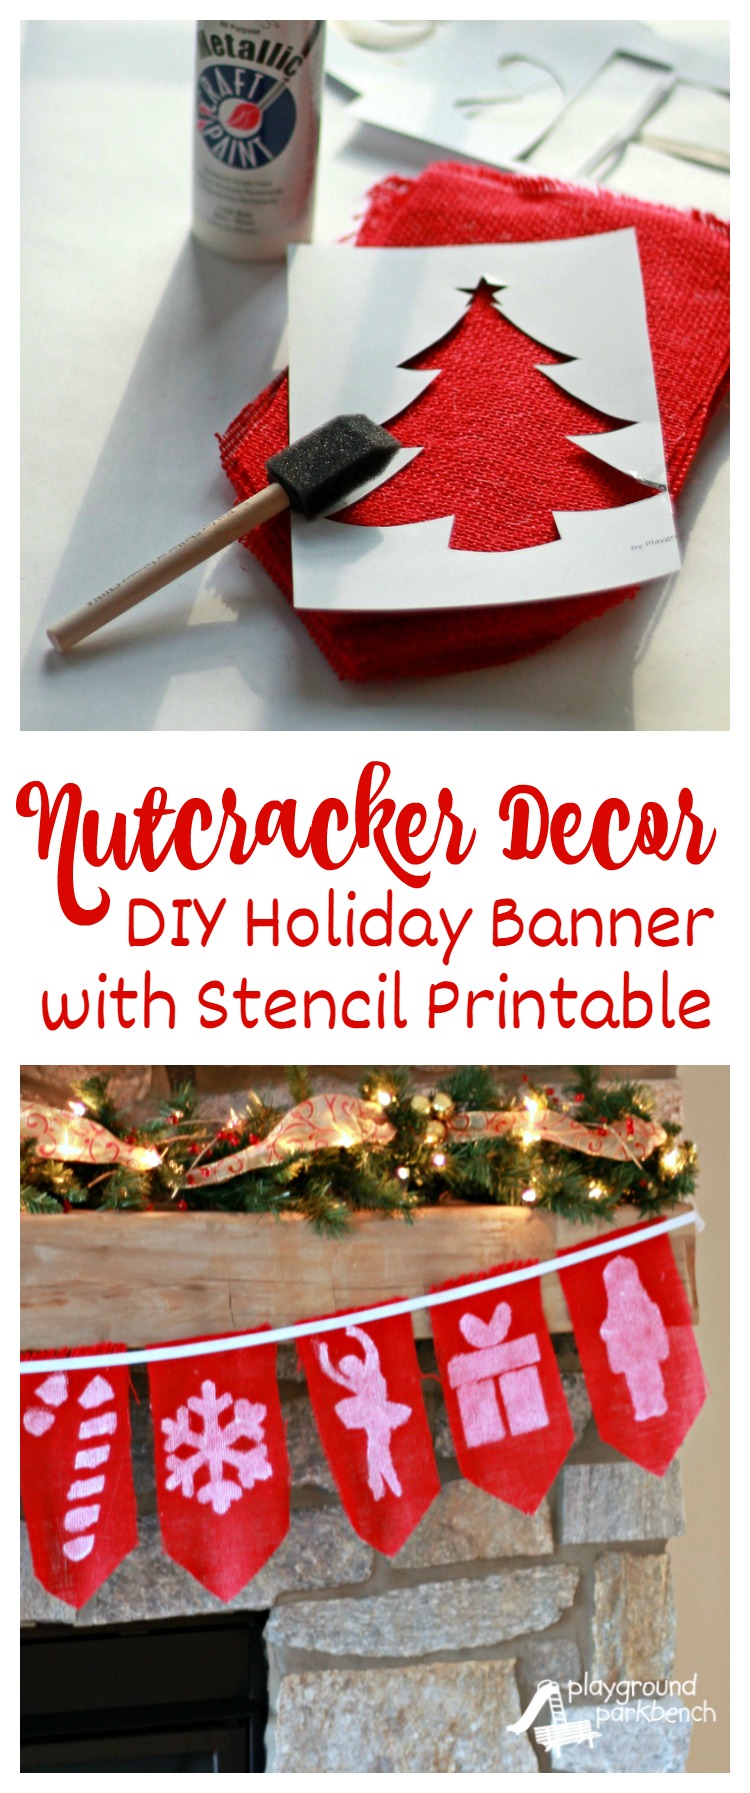 Nutcracker Decor DIY Holiday Banner with Stencil Printable